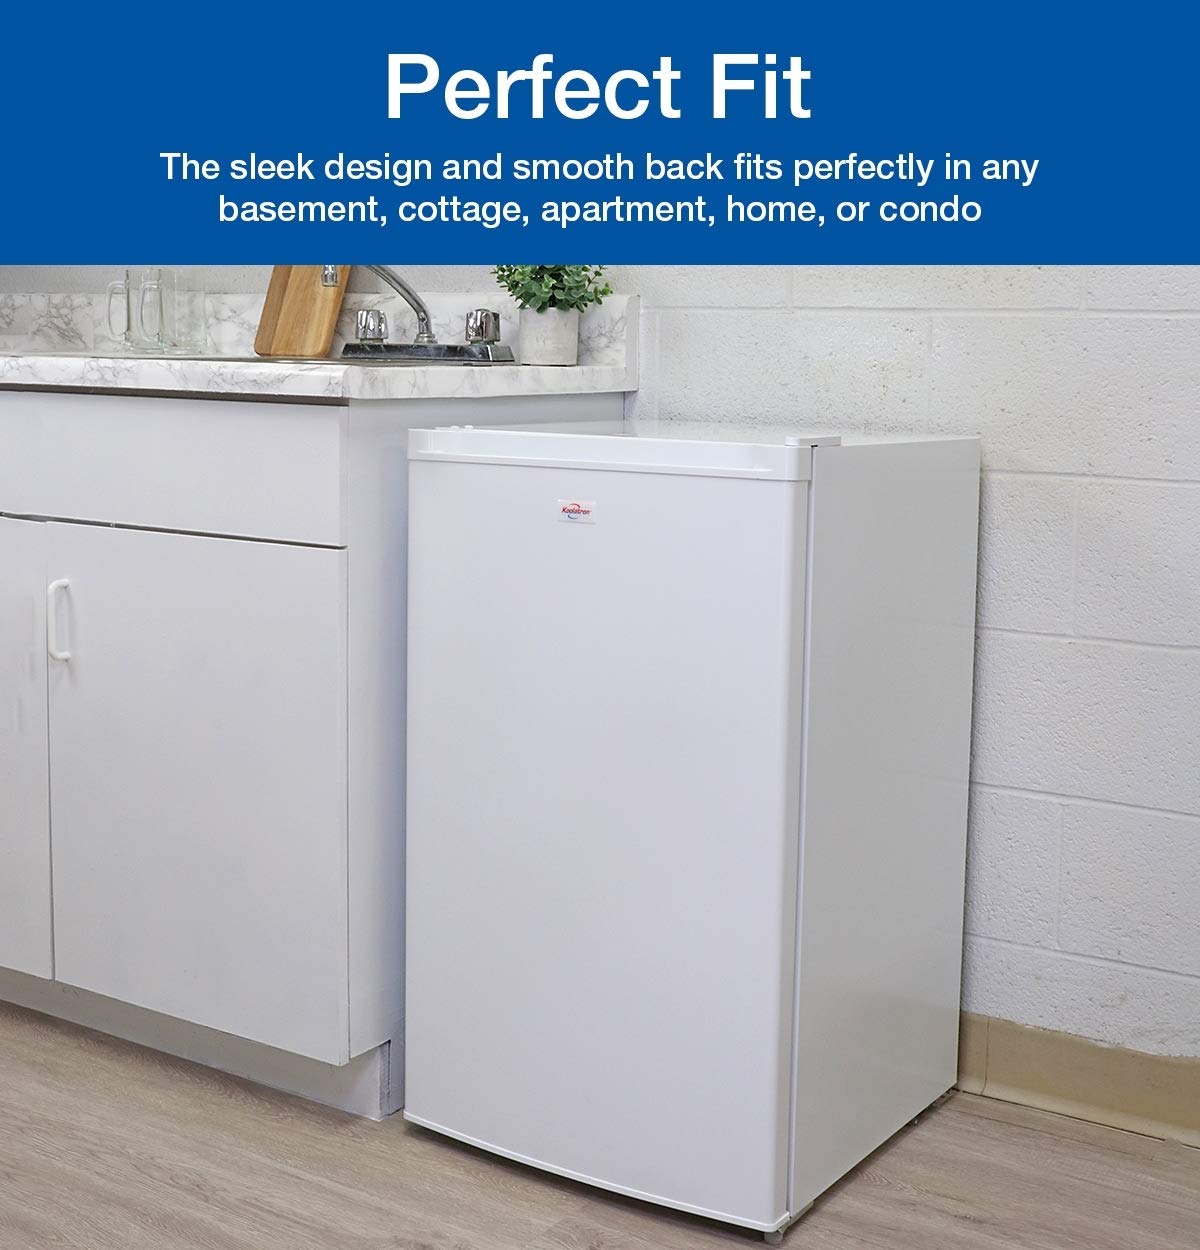 Koolatron Compact Upright Freezer, 3.1 cu ft (88L), White, Manual Defrost Design, Space-Saving Flat Back, Reversible Door, 3 Pull-Out Basket Shelves, for Apartment, Condo, Cottage